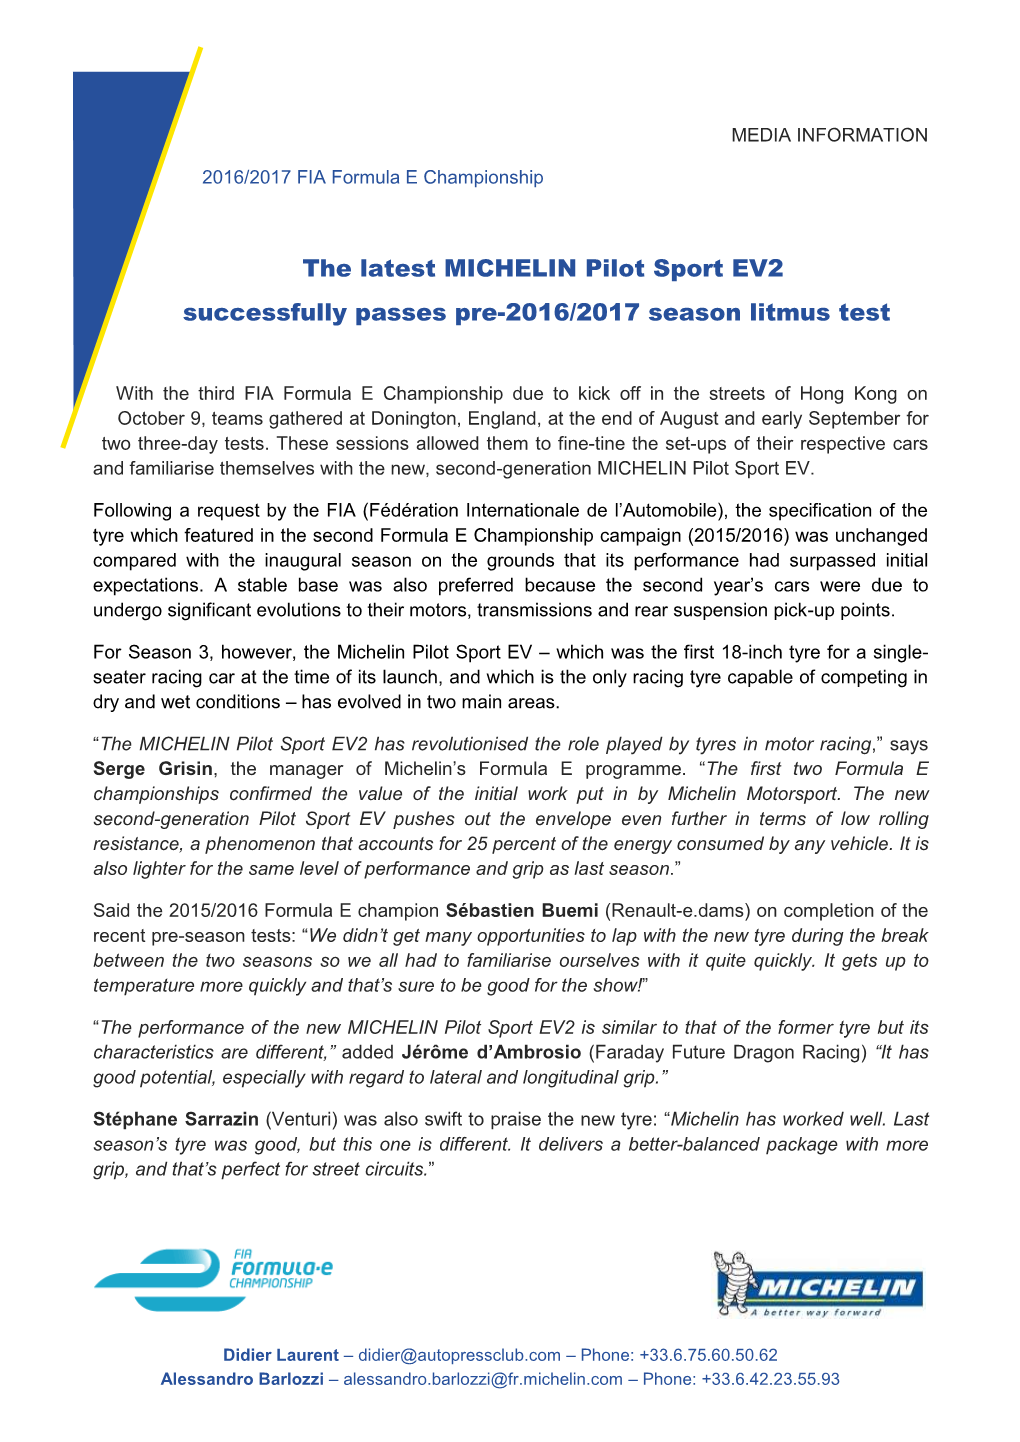 The Latest MICHELIN Pilot Sport EV2 Successfully Passes Pre-2016/2017 Season Litmus Test